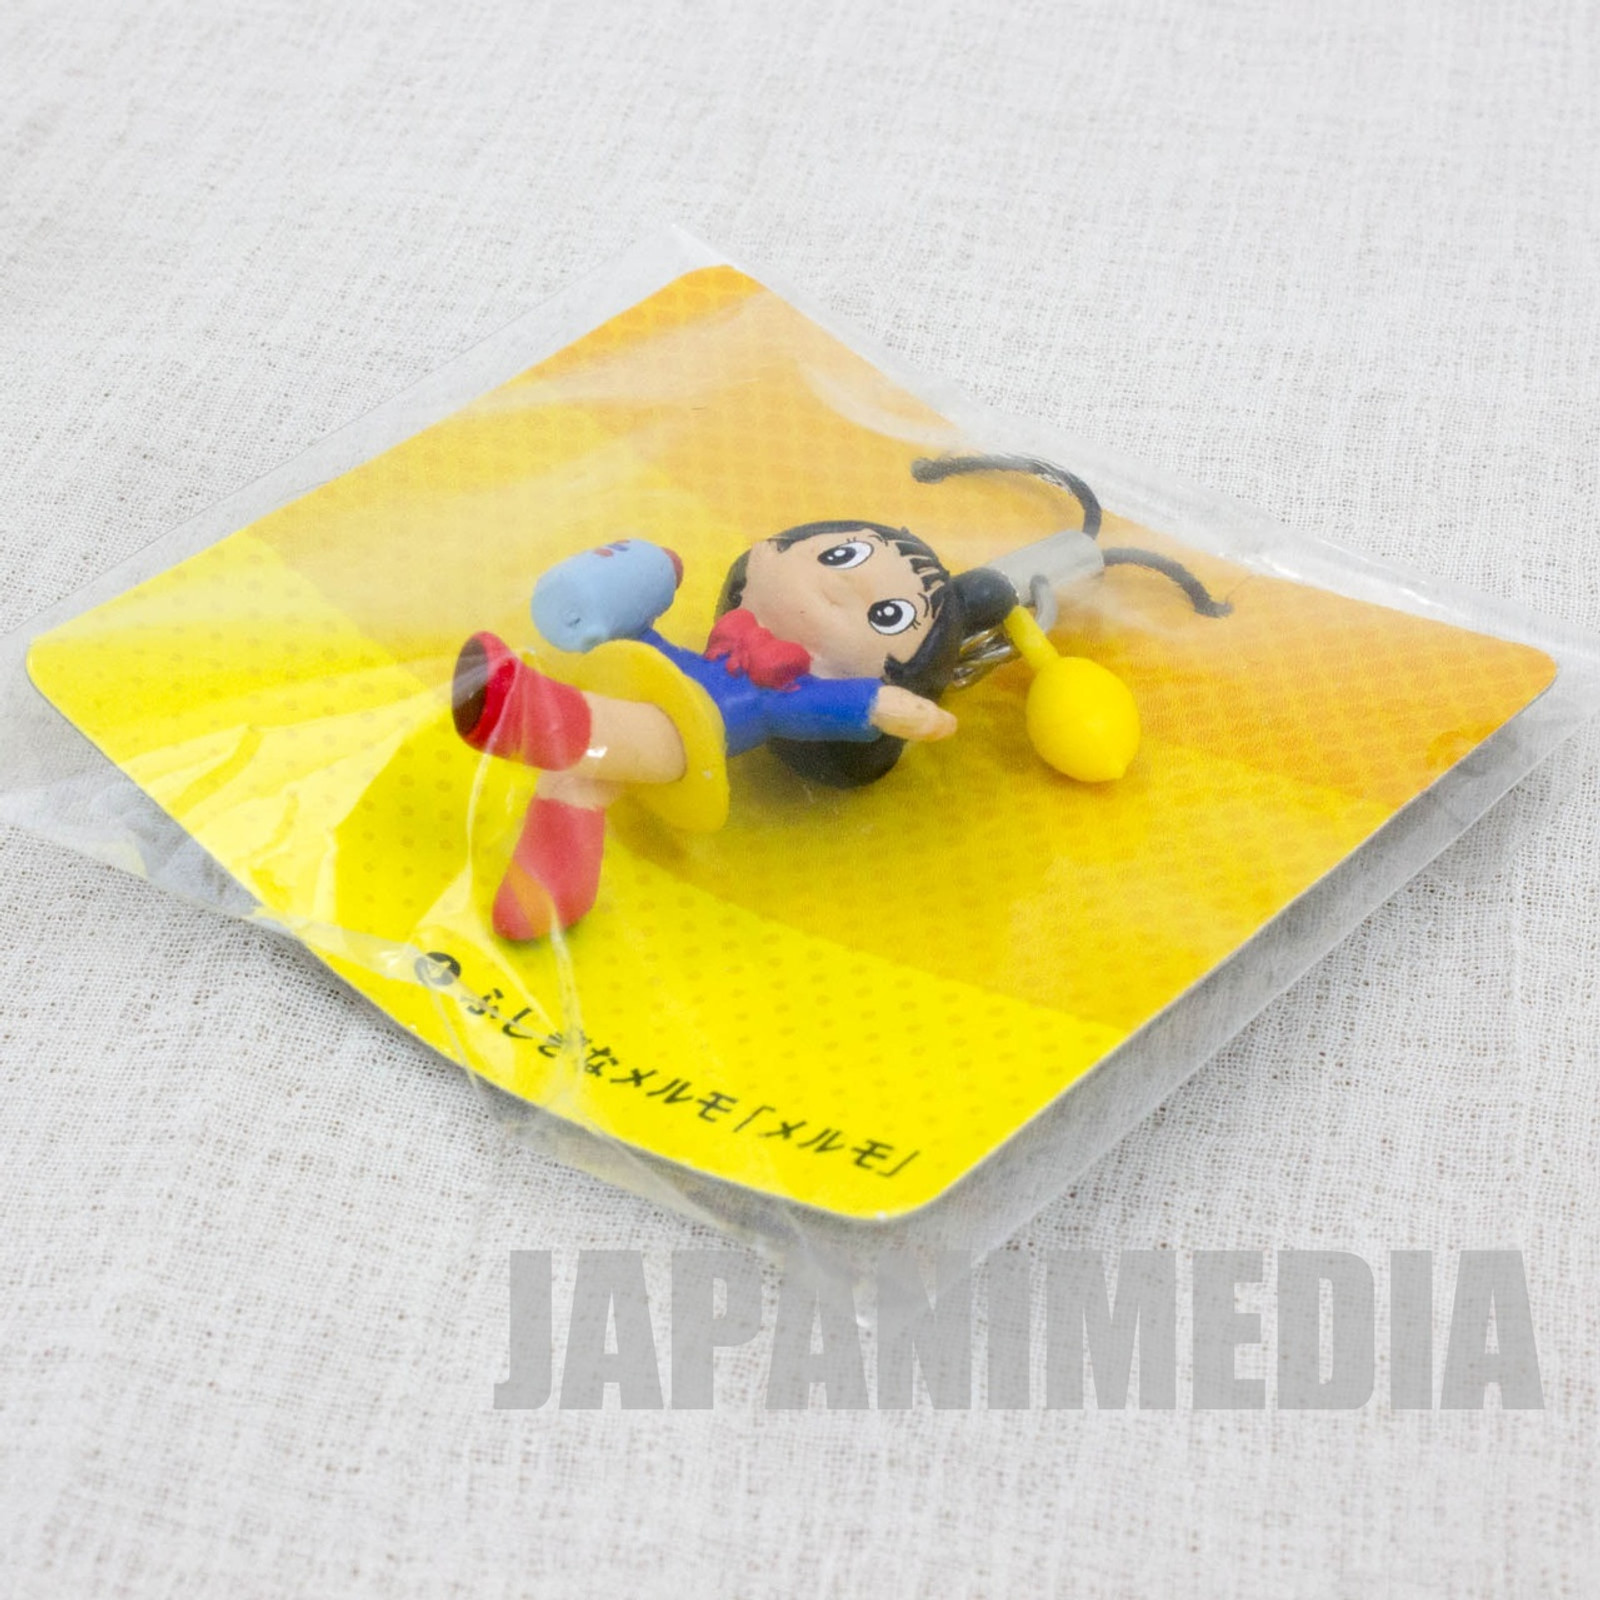 Marvelous Melmo One Mascot Figure Strap Osamu Tezuka JAPAN ANIME